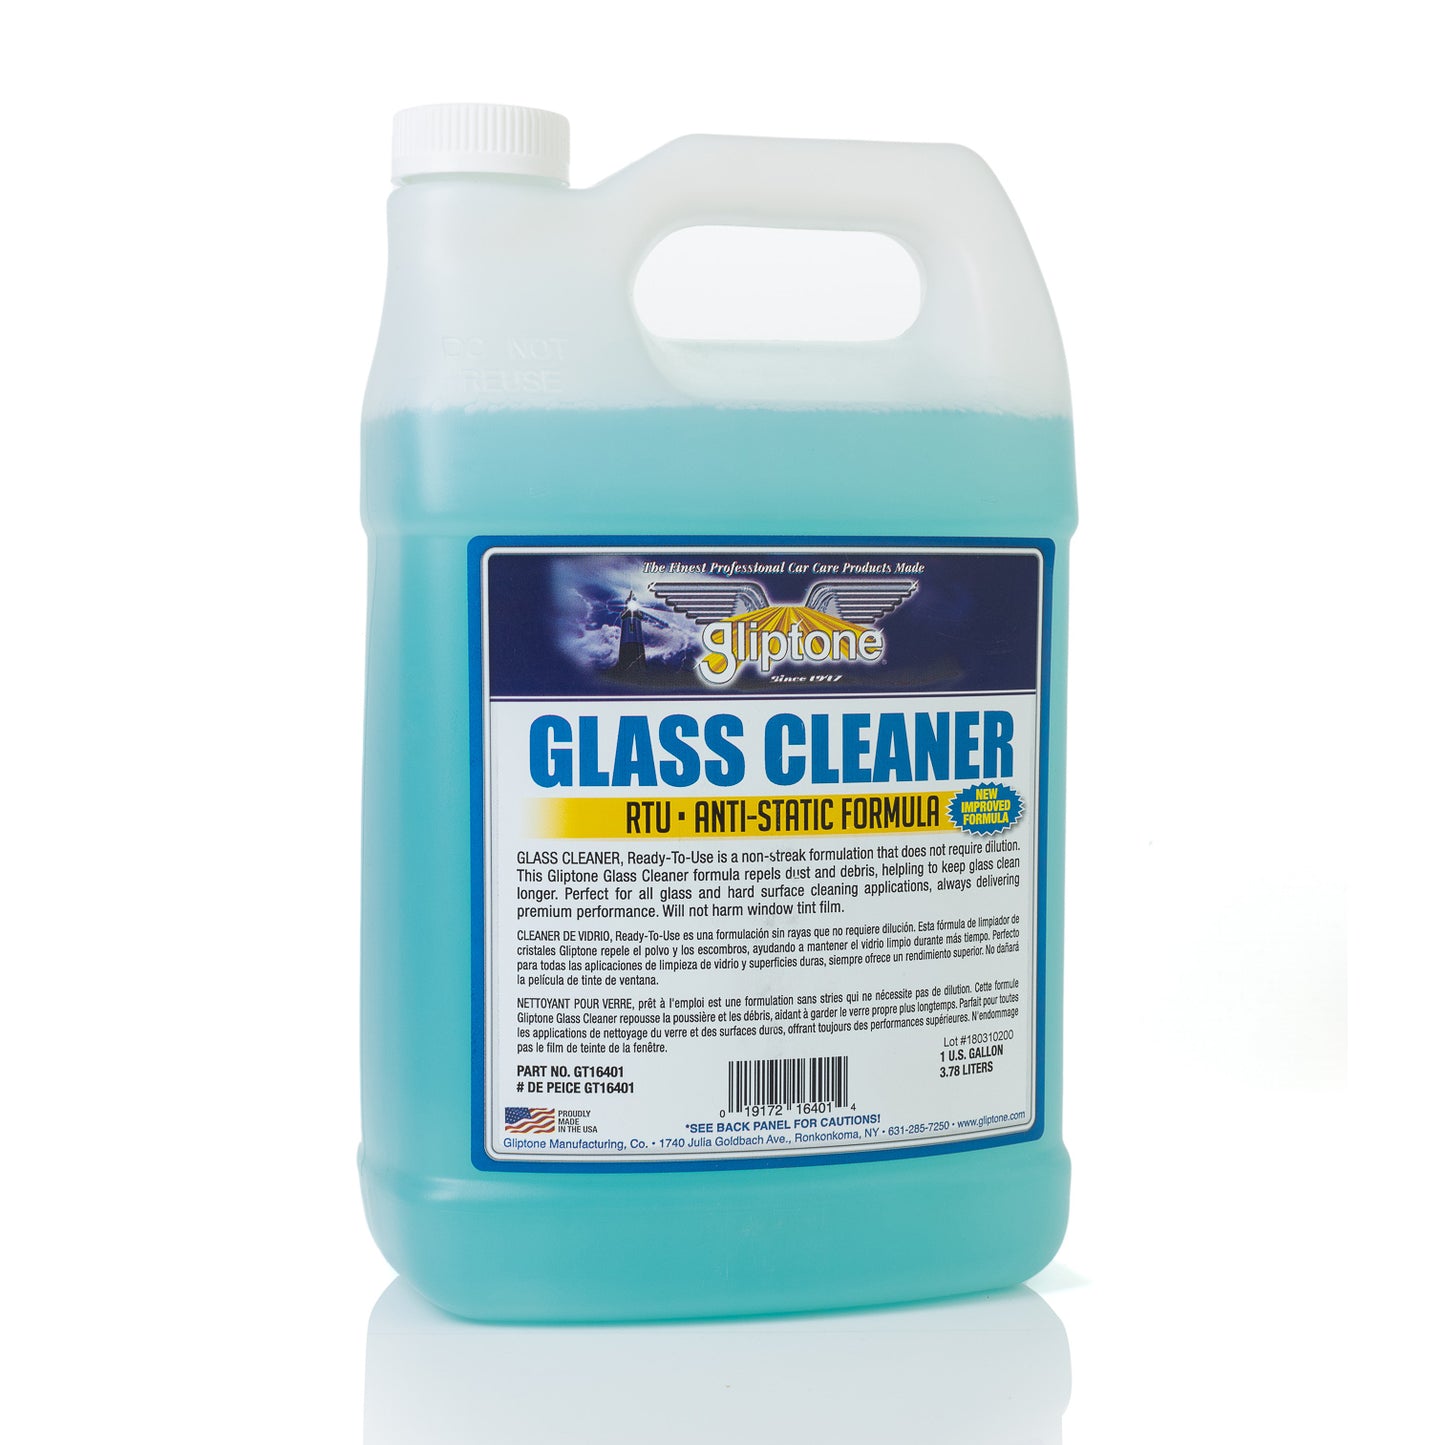 Gliptone Glass Cleaner RTU Anti-Static Formula